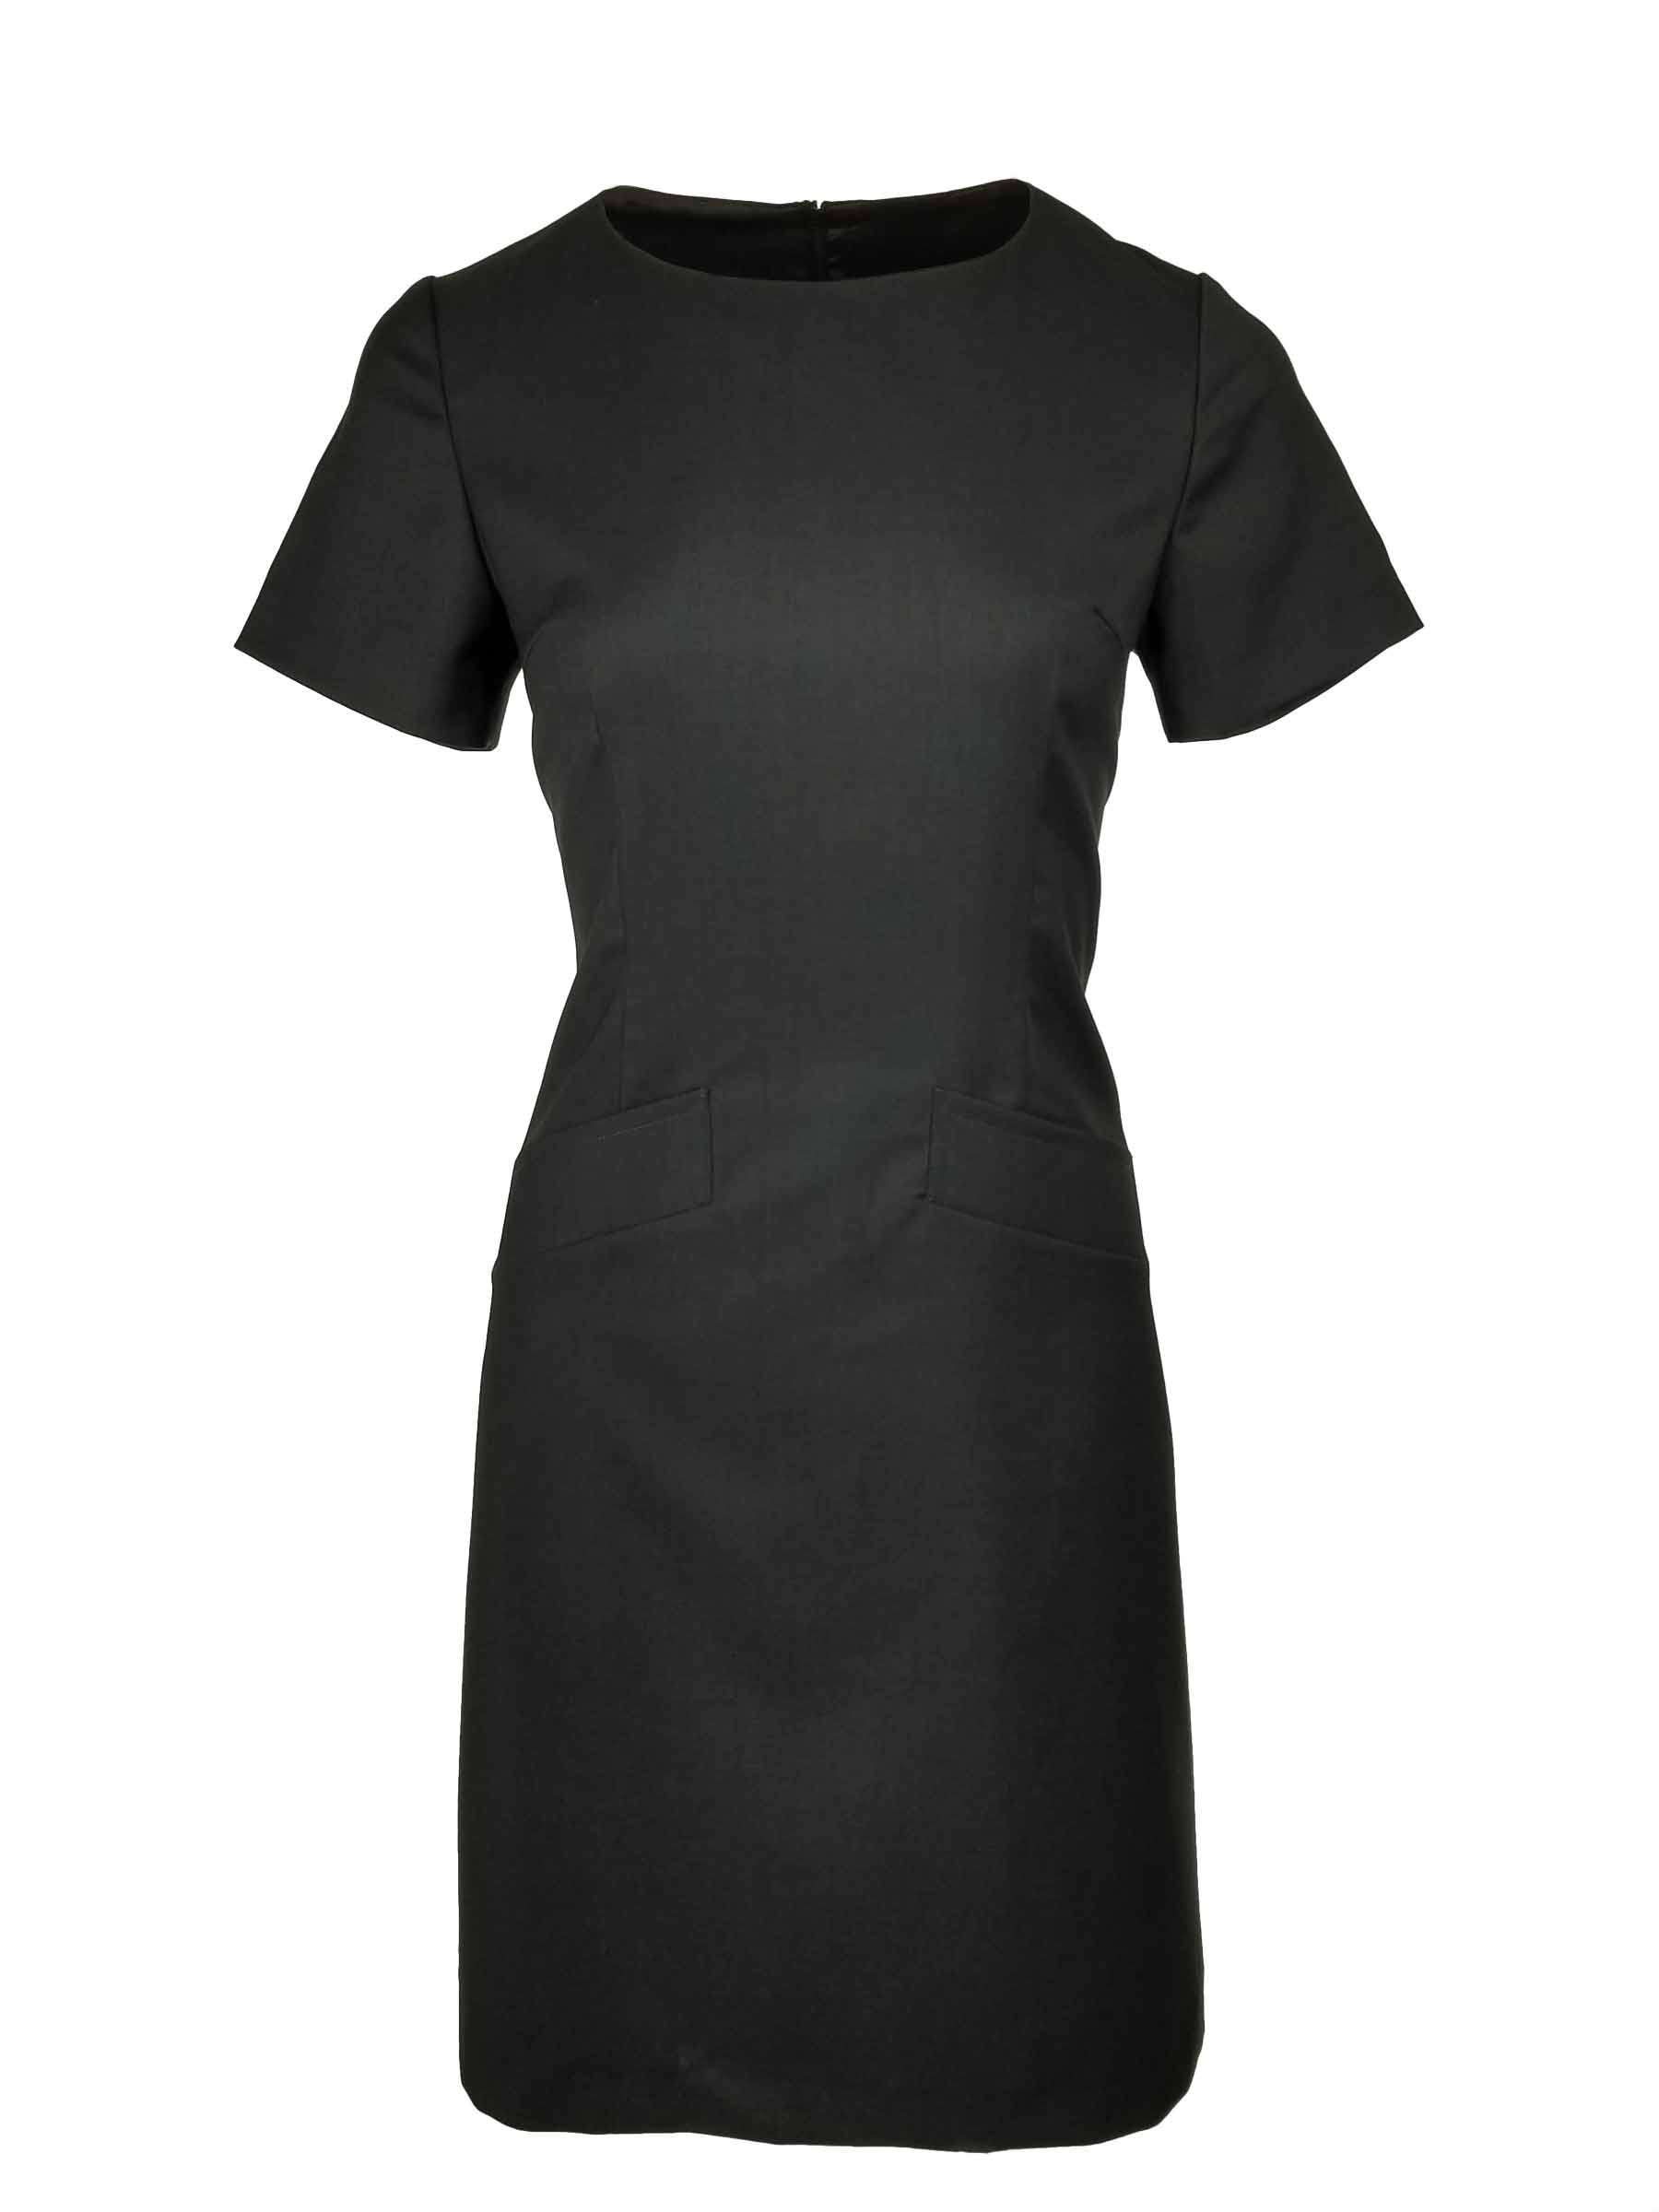 Giorga Short Sleeve A-Line Dress - Black - Uniform Edit